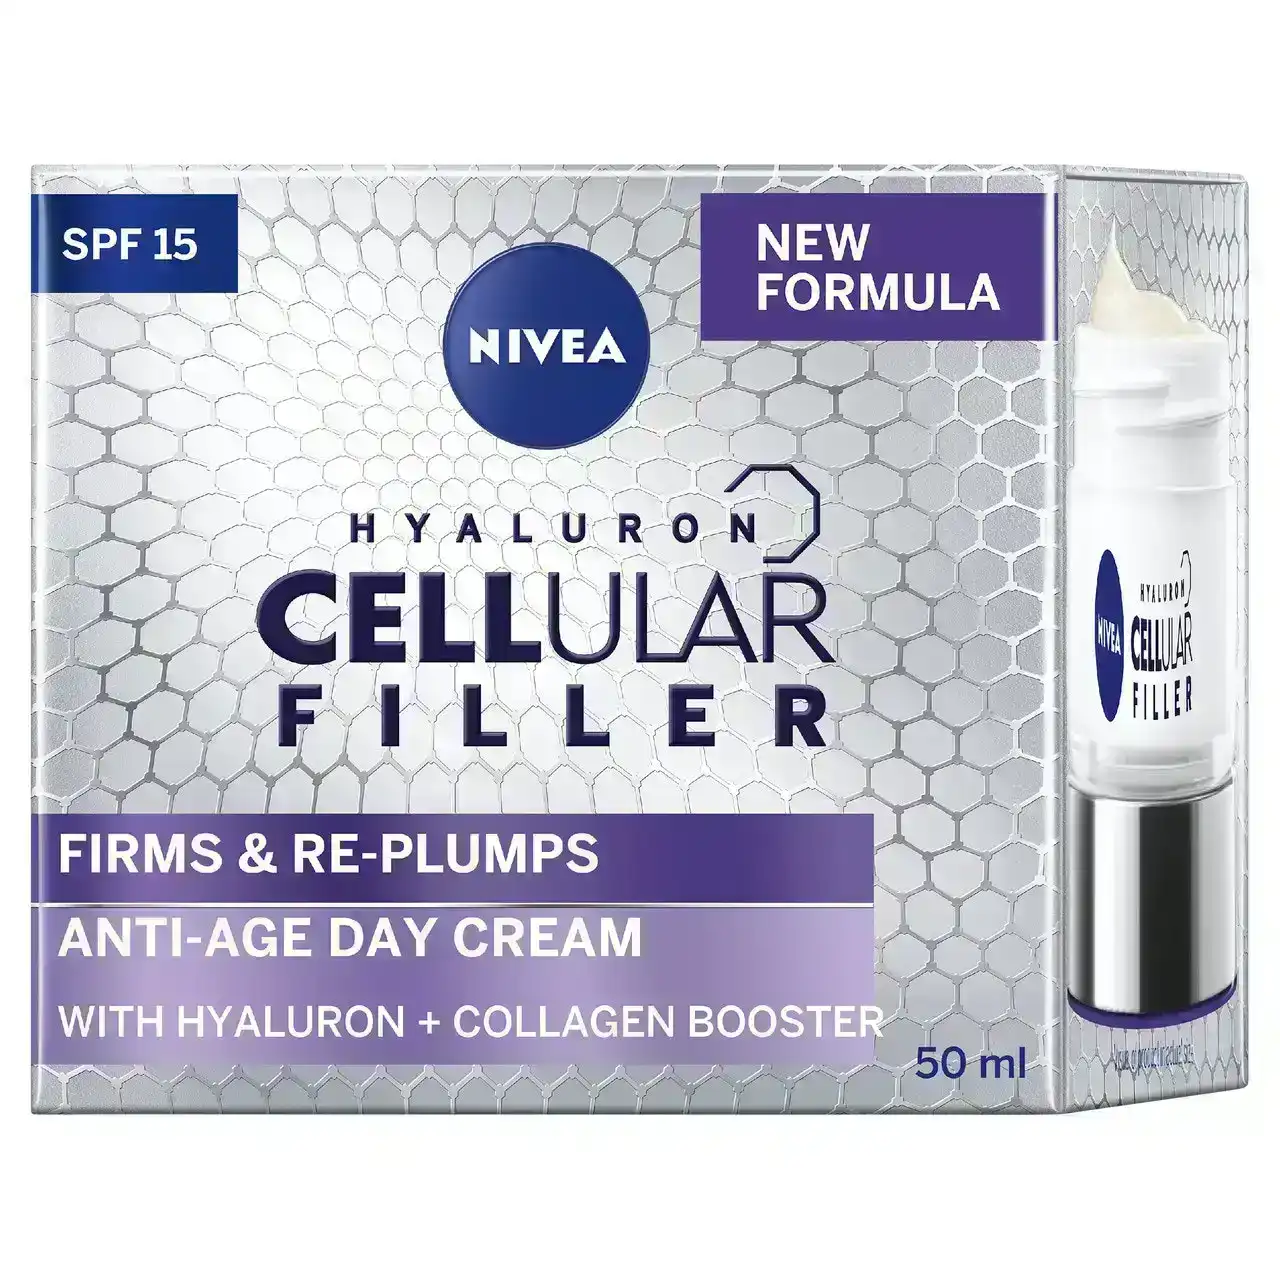 Nivea Cellular Filler Expert Anti-Age Day Cream